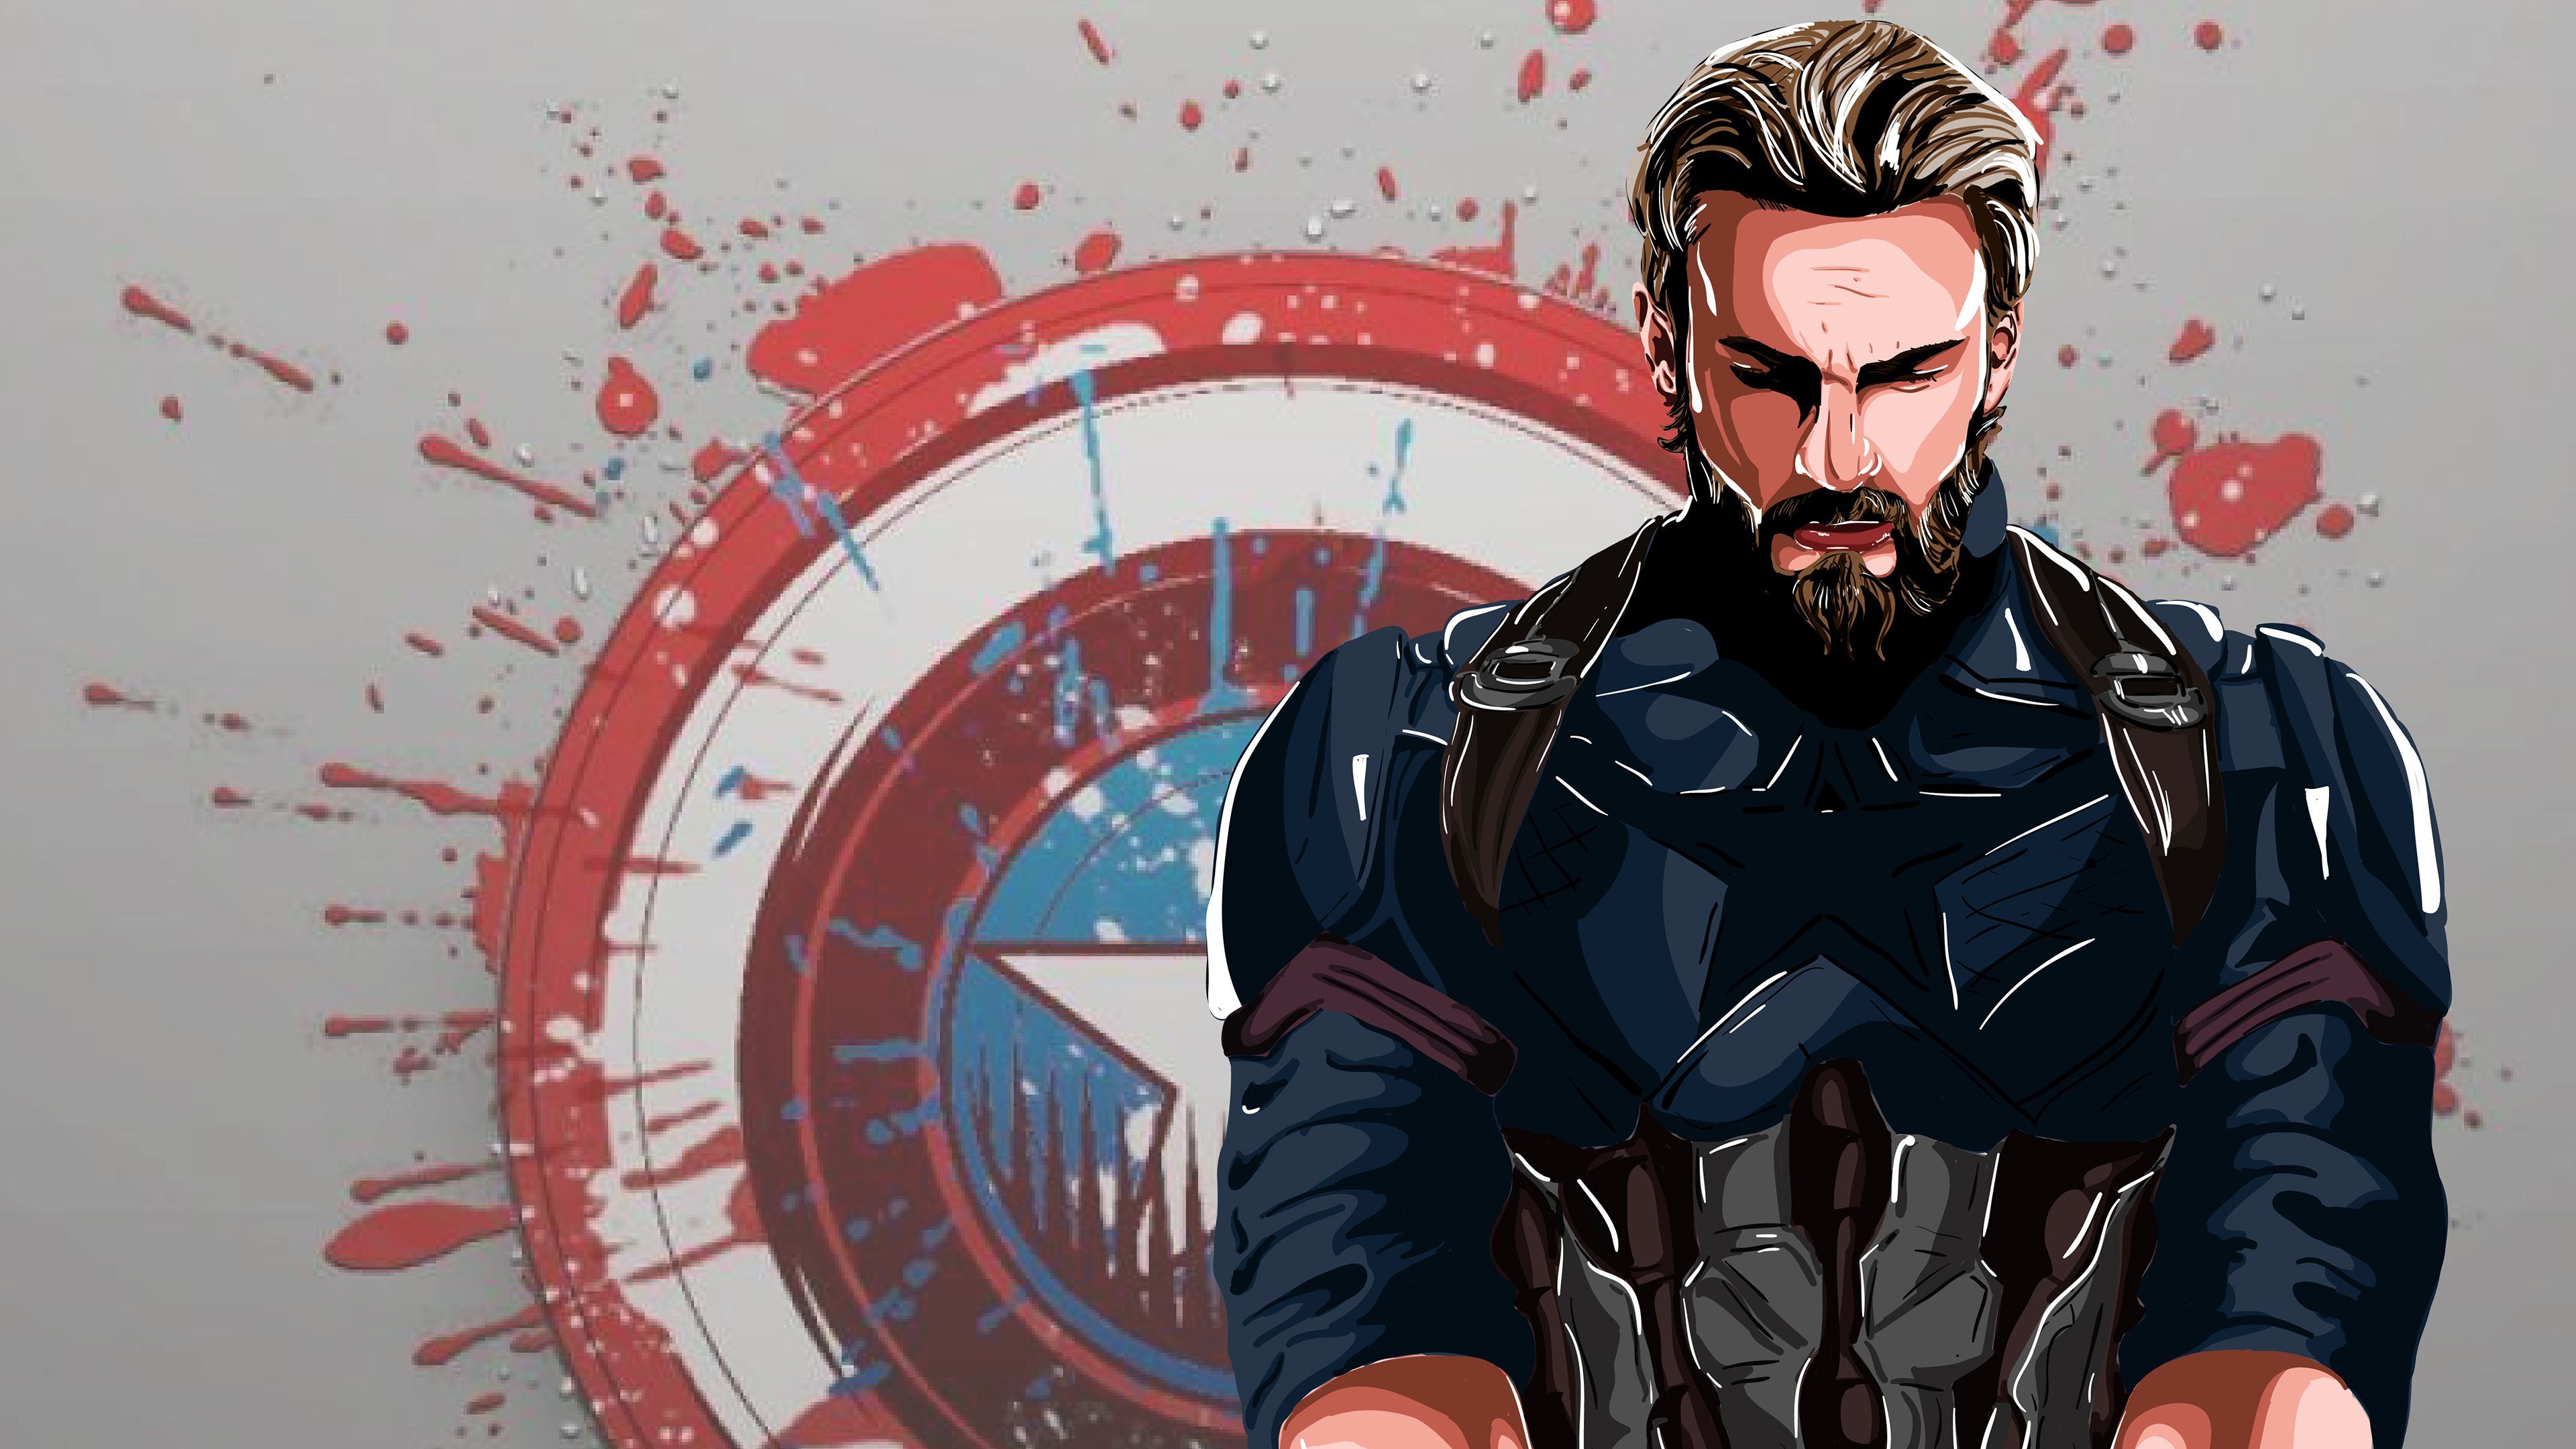 Captain America New Art 4k Superheroes Wallpaper, Hd Wallpaper, Digital Art Wallpaper, Captain. Captain America Wallpaper, Captain America Art, Captain America